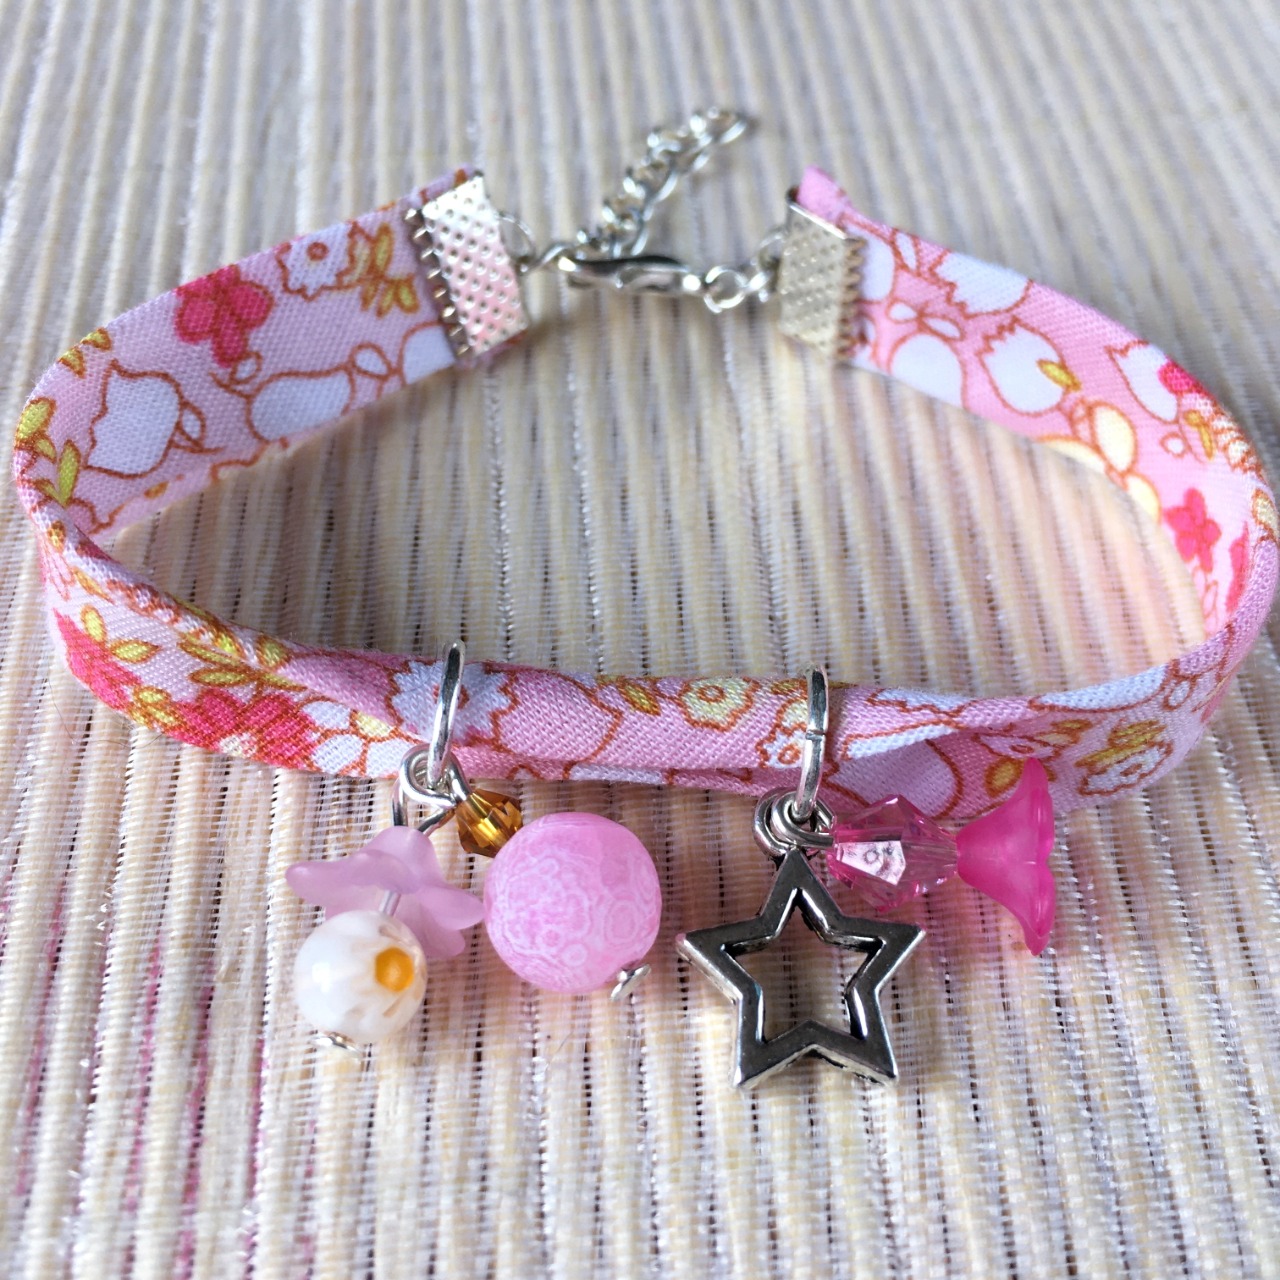 Bracelet 17cm; ruban fleuri rose doux et blanc, étoile